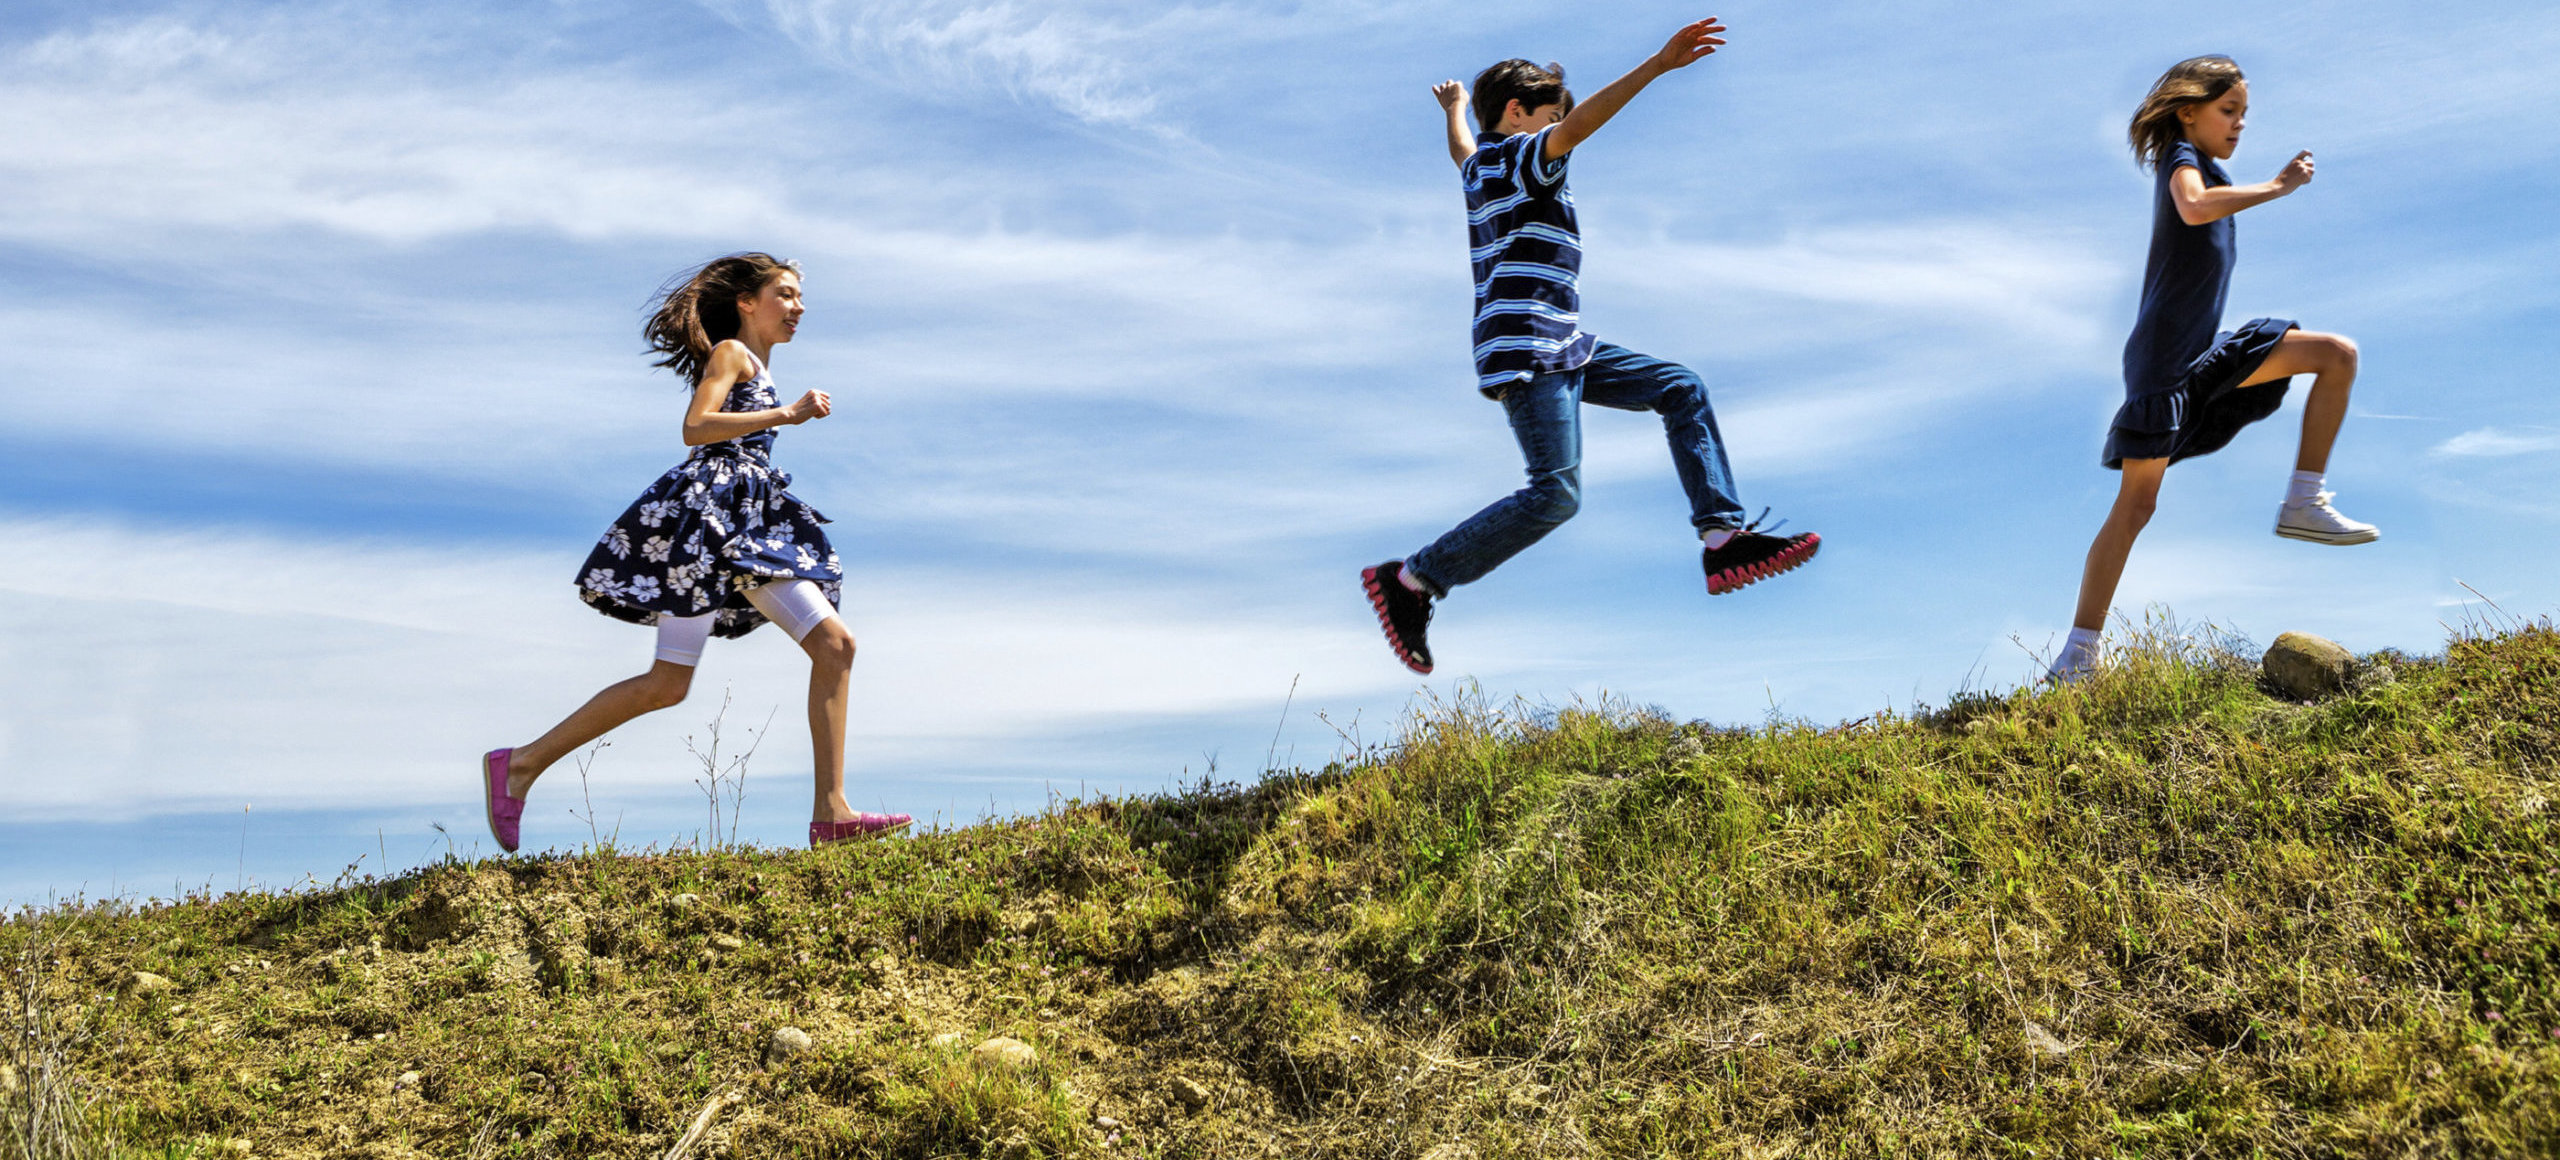 Three children run and jump across the grass.